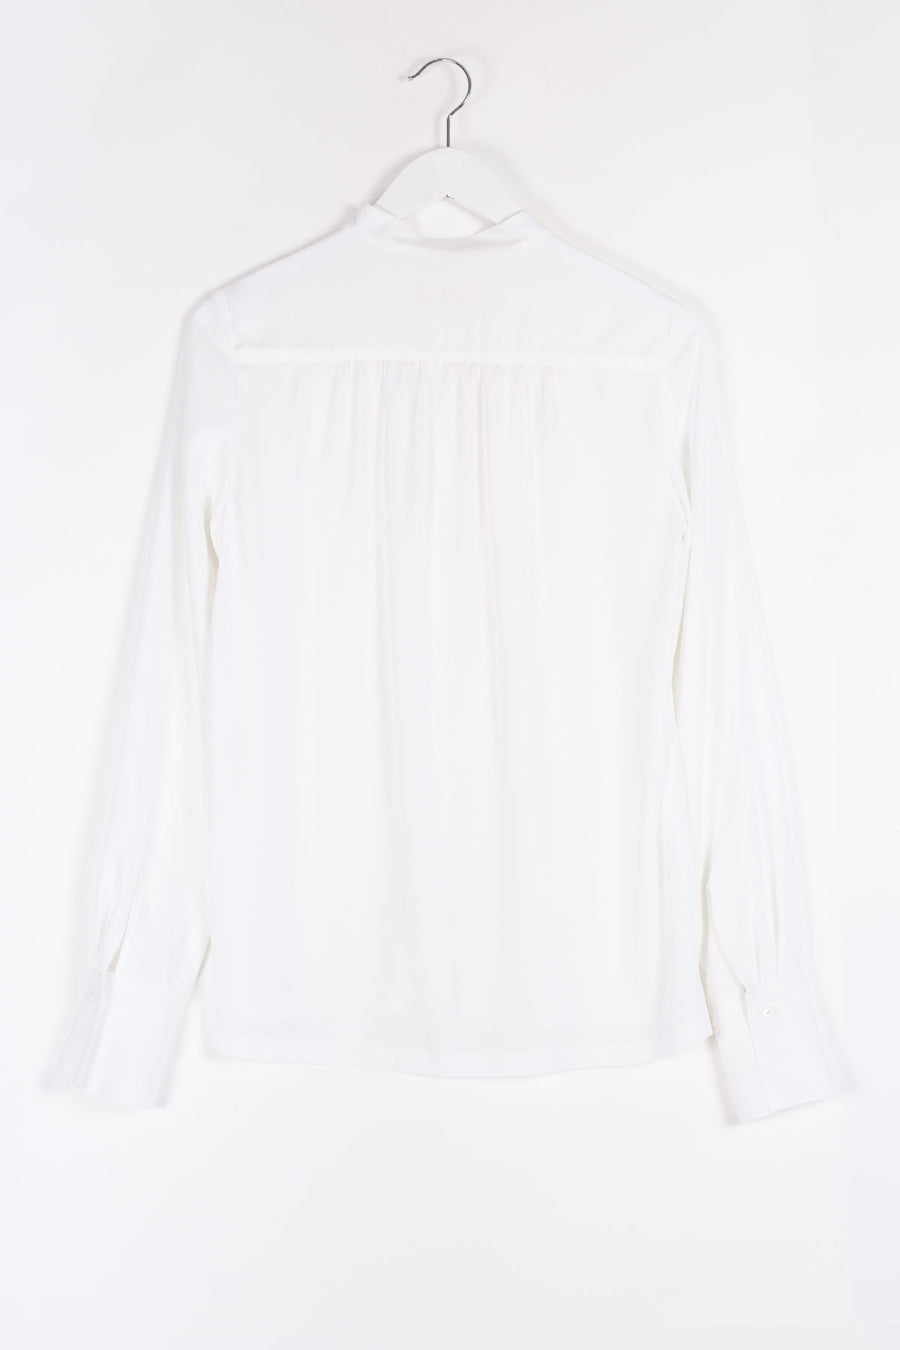 GAMMY Light Polyester Blouse- White